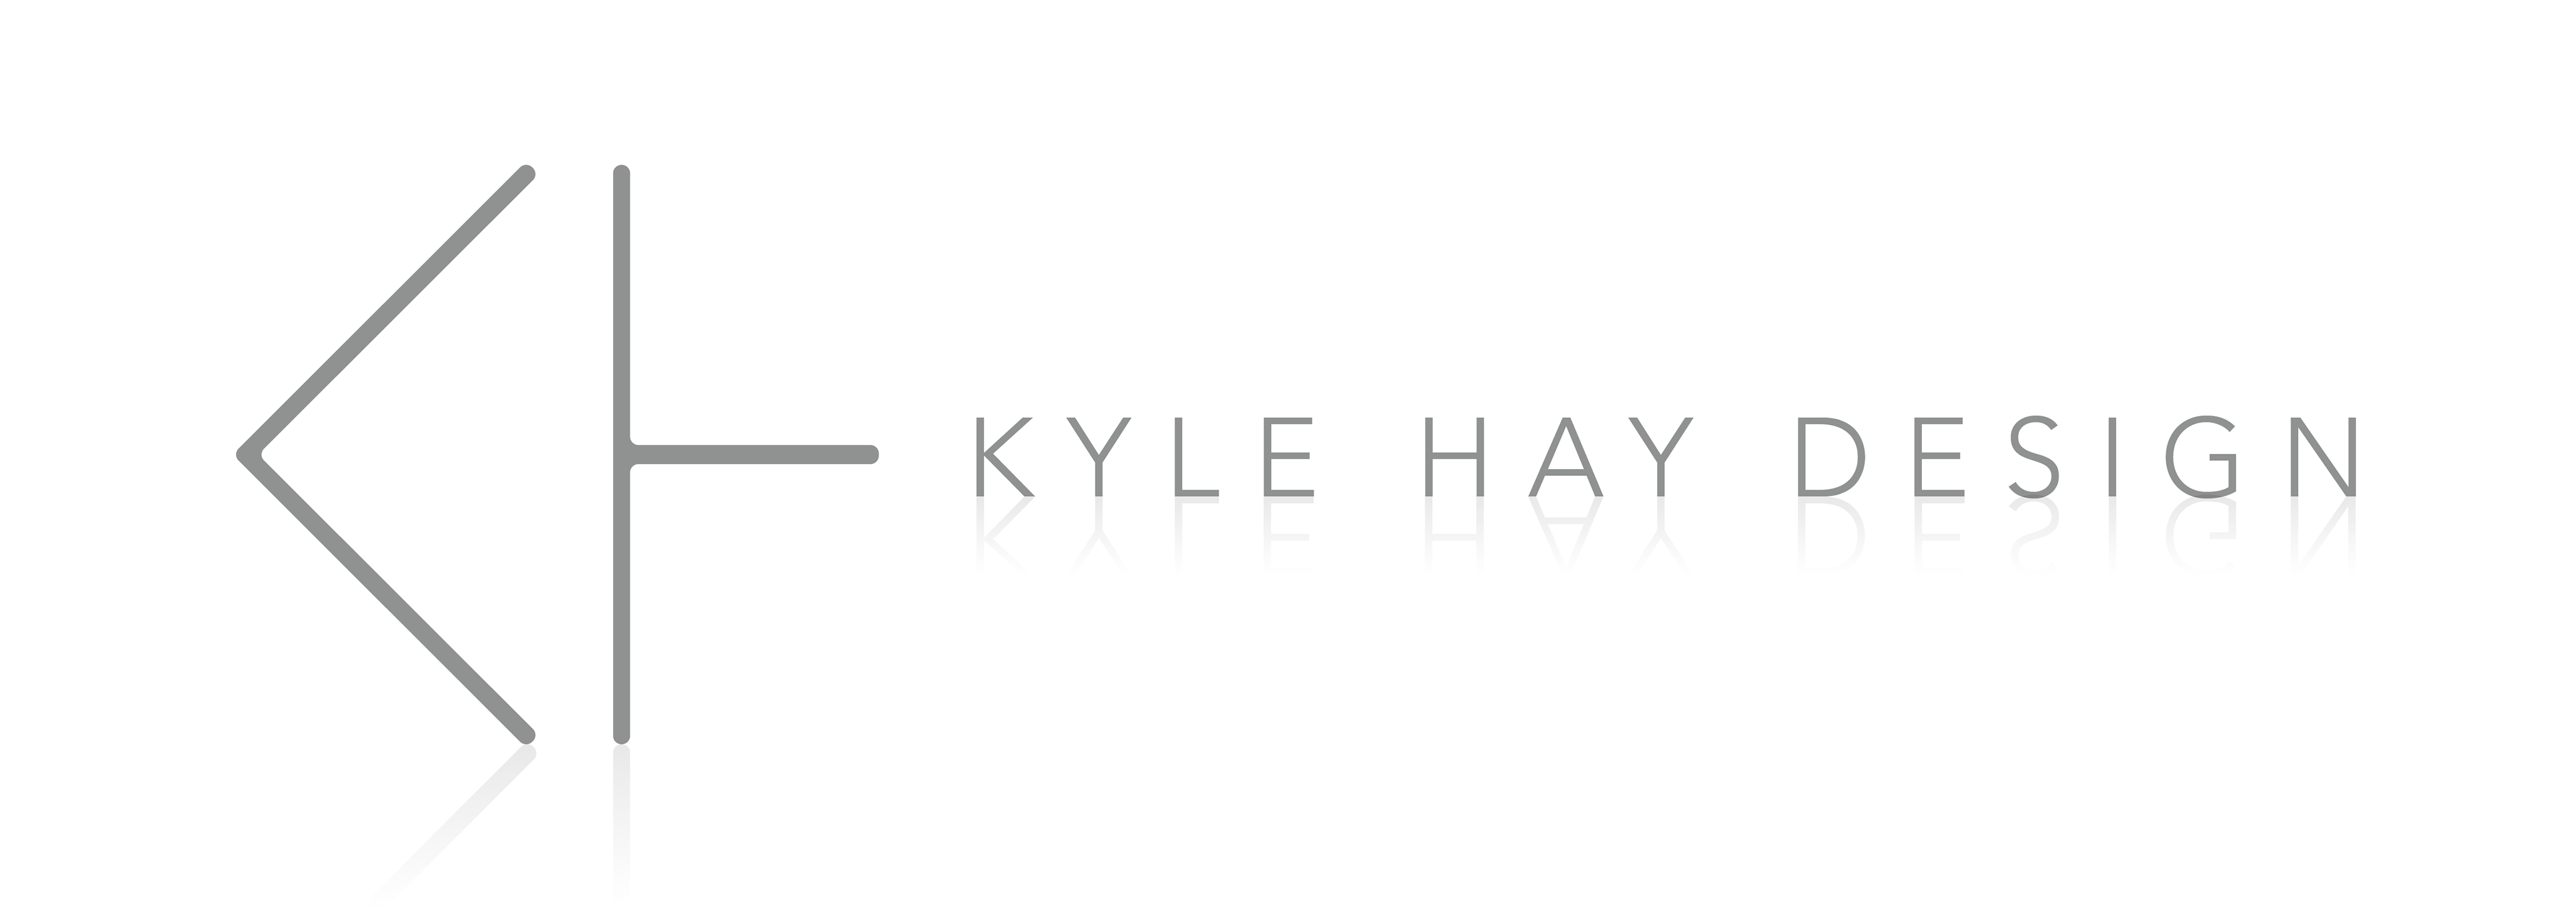 Kyle Hay